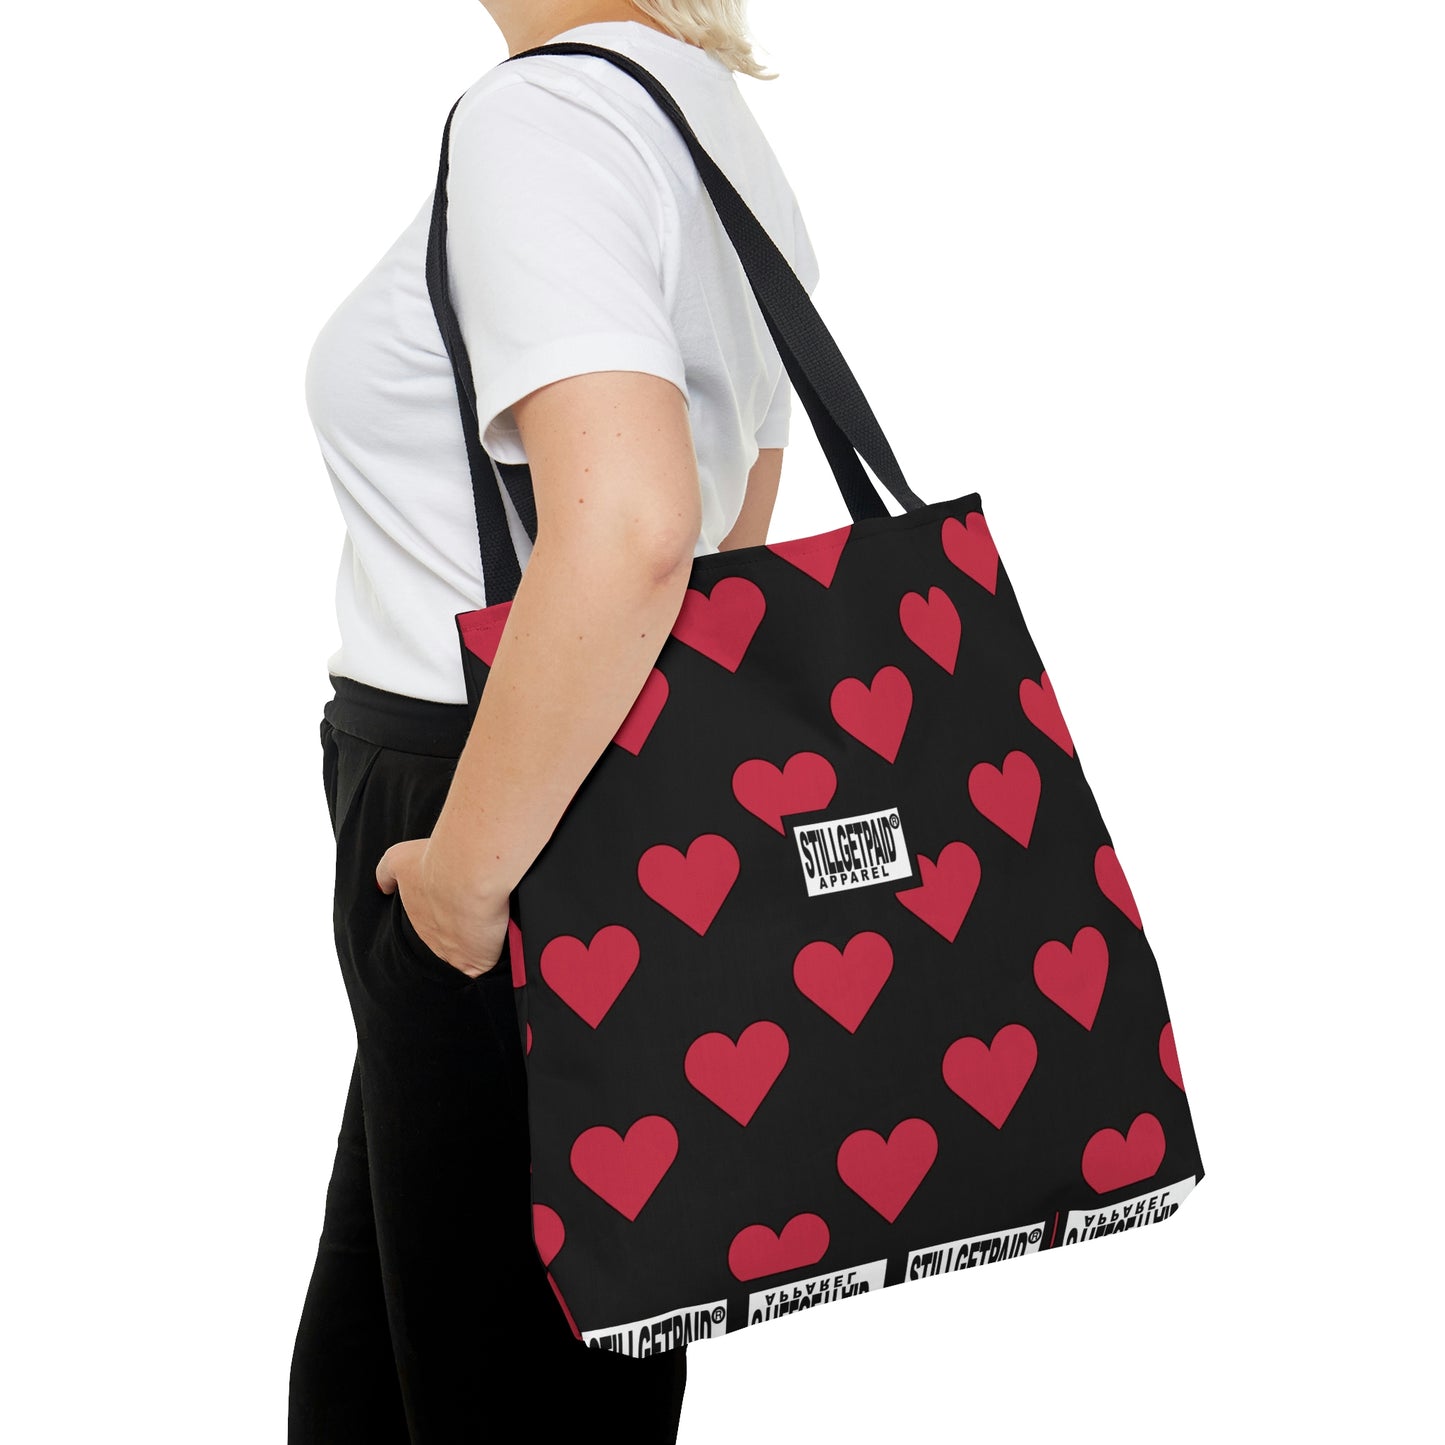 STILLGETPAID® APPAREL BLACK RED HEART TALL Tote Bag